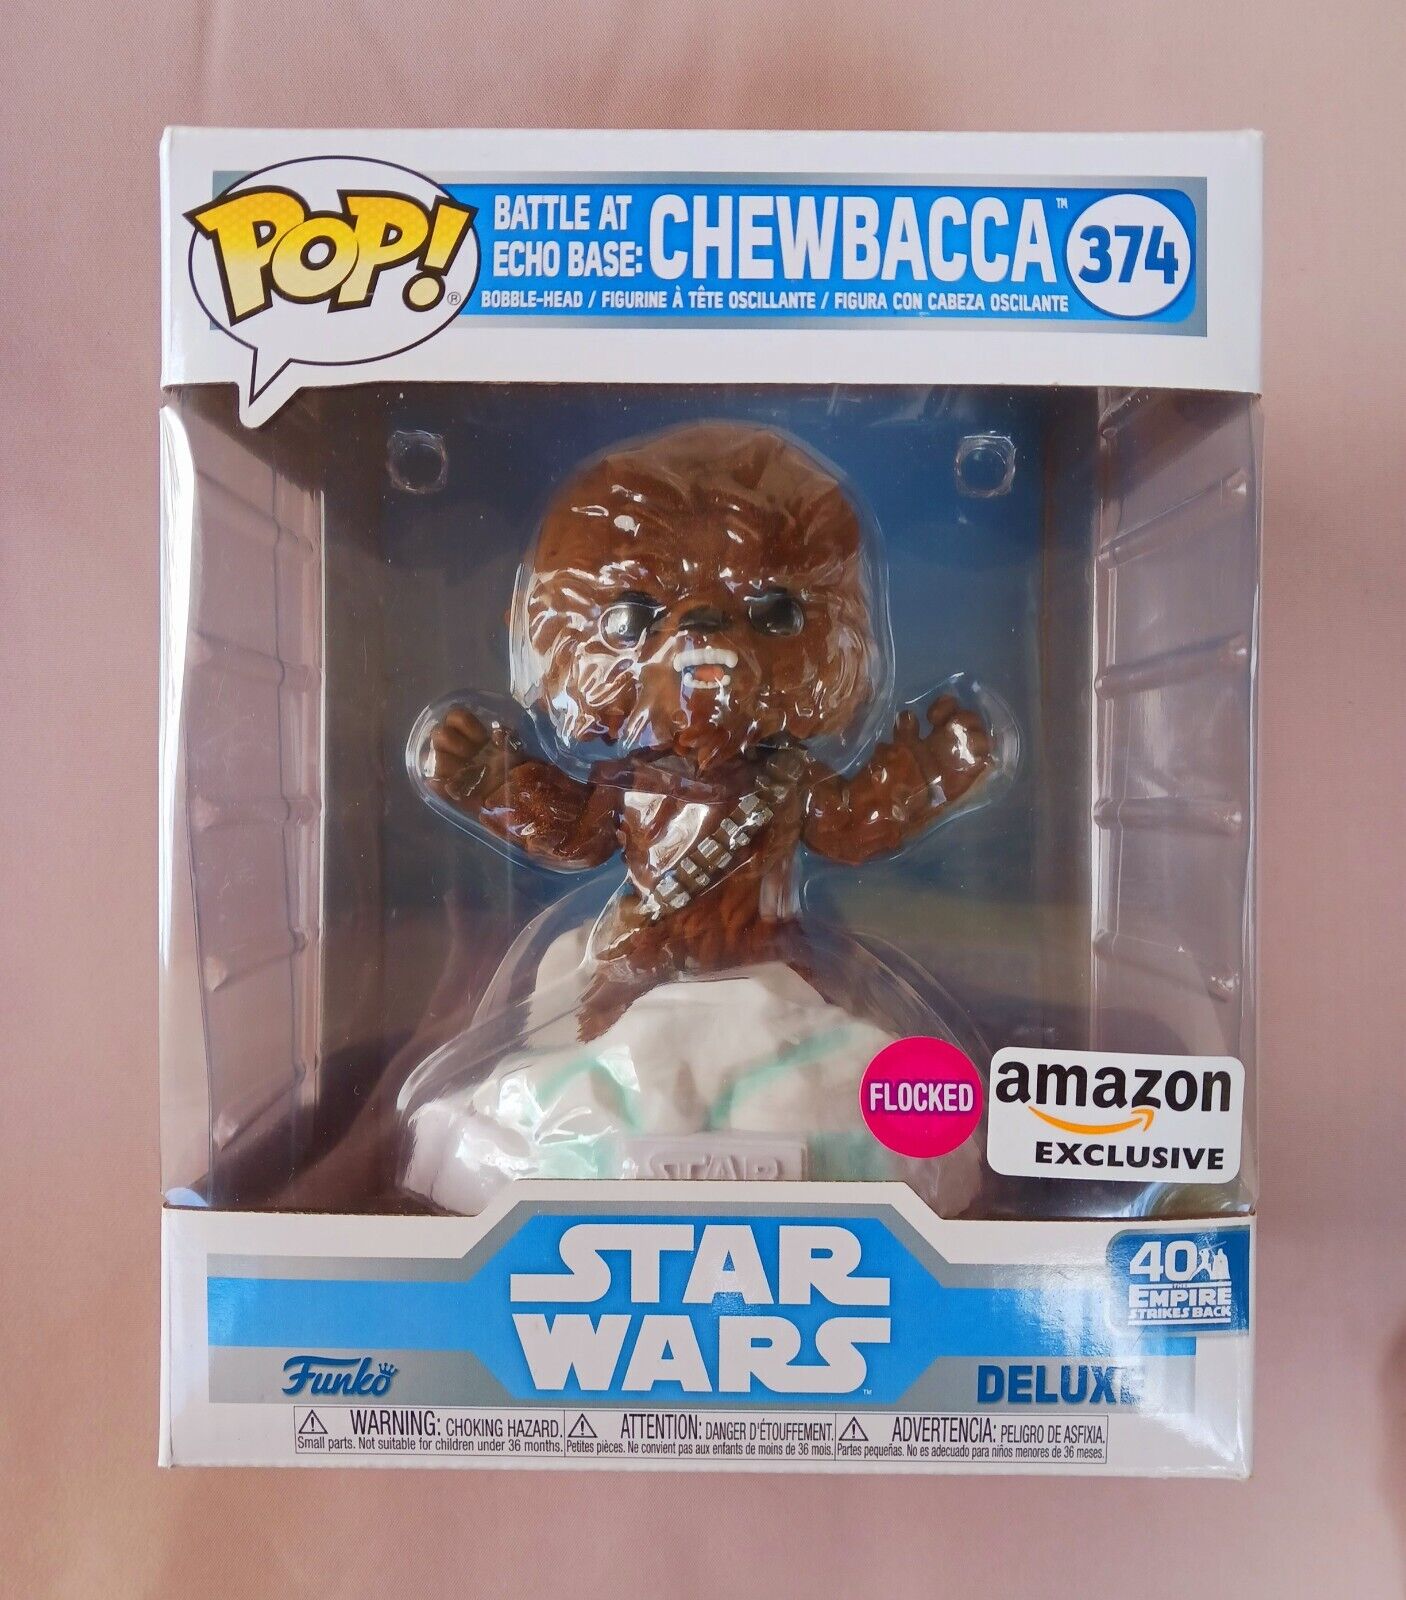 Funko Pop Star Wars Battle at Echo Base Chewbacca #374 Flocked Amazon Exclusive